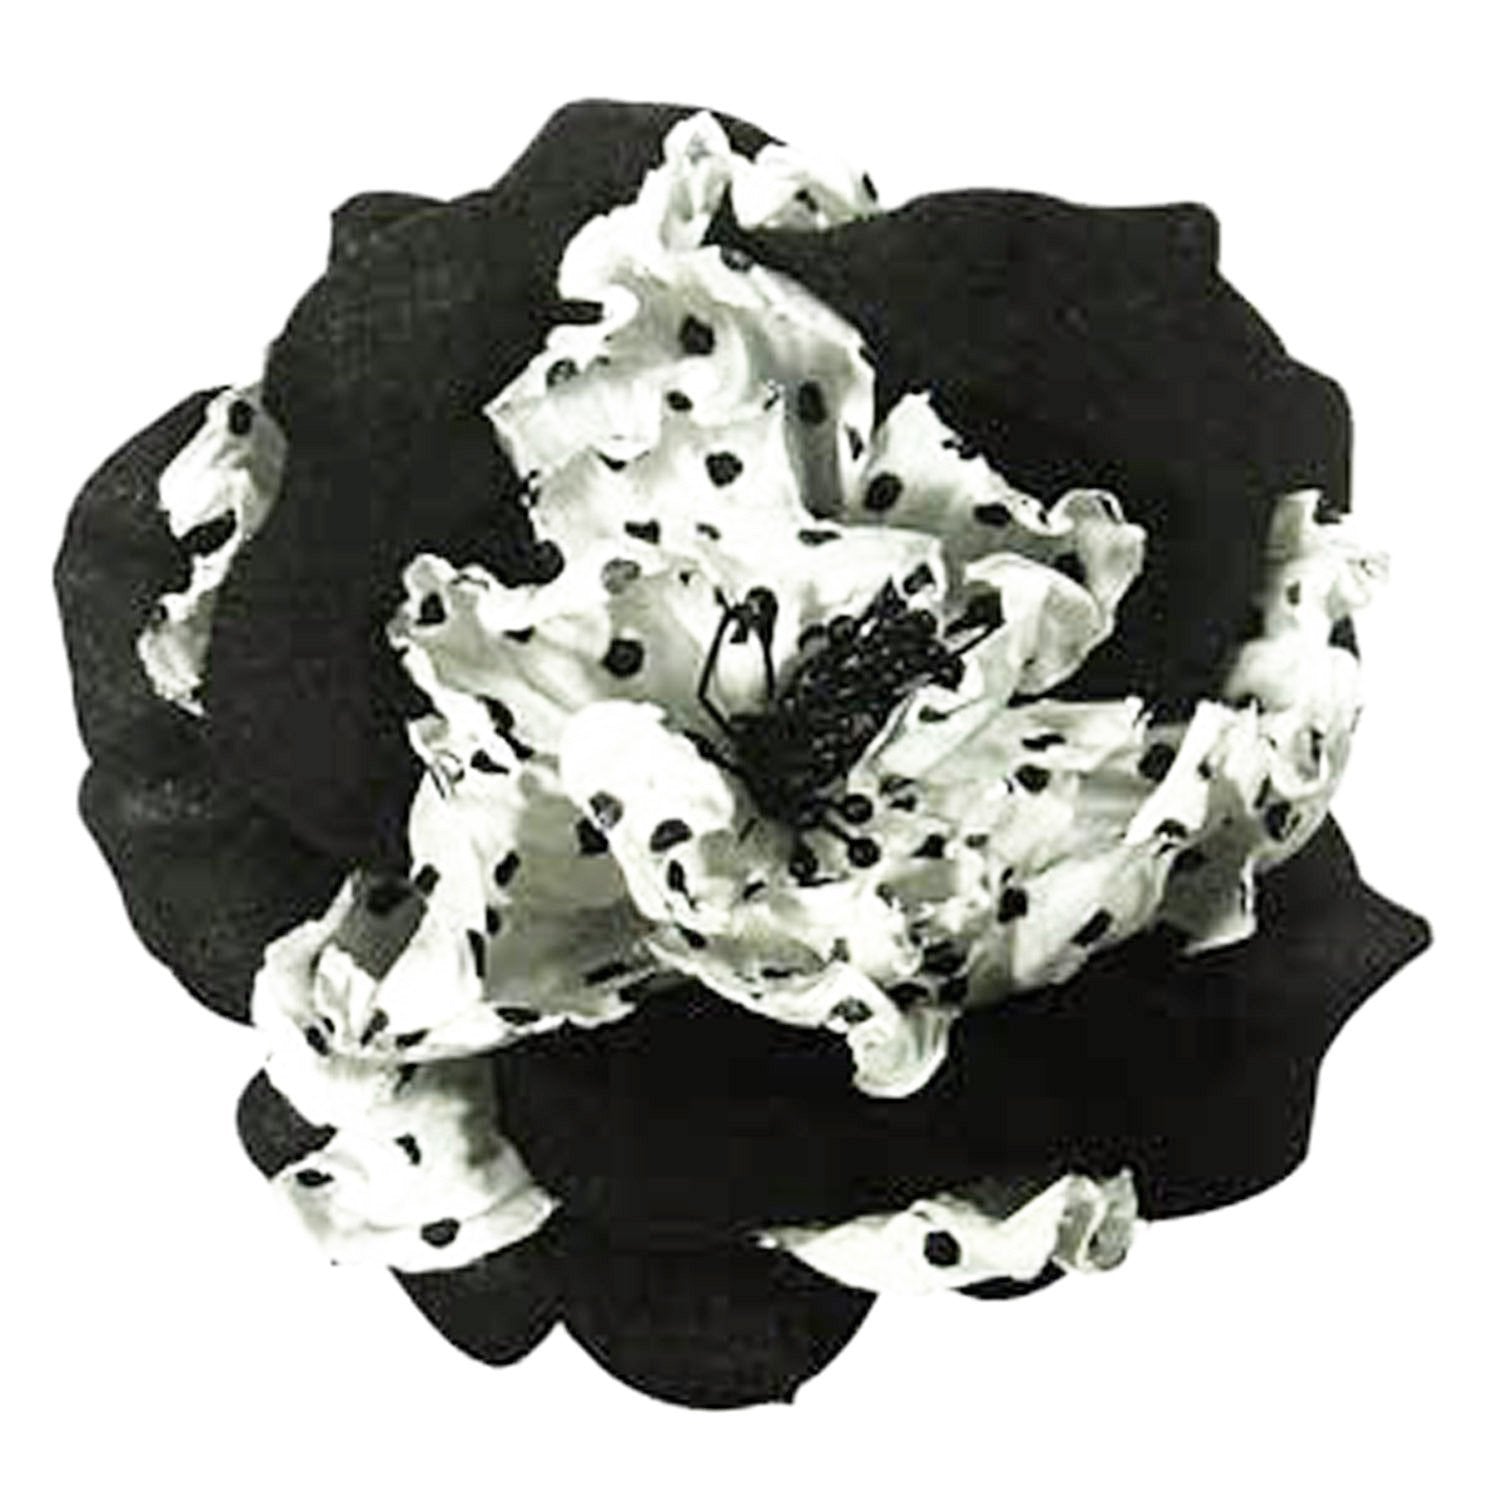 Flower Brooch in Black & White Polka Dots | Pandemonium Millinery